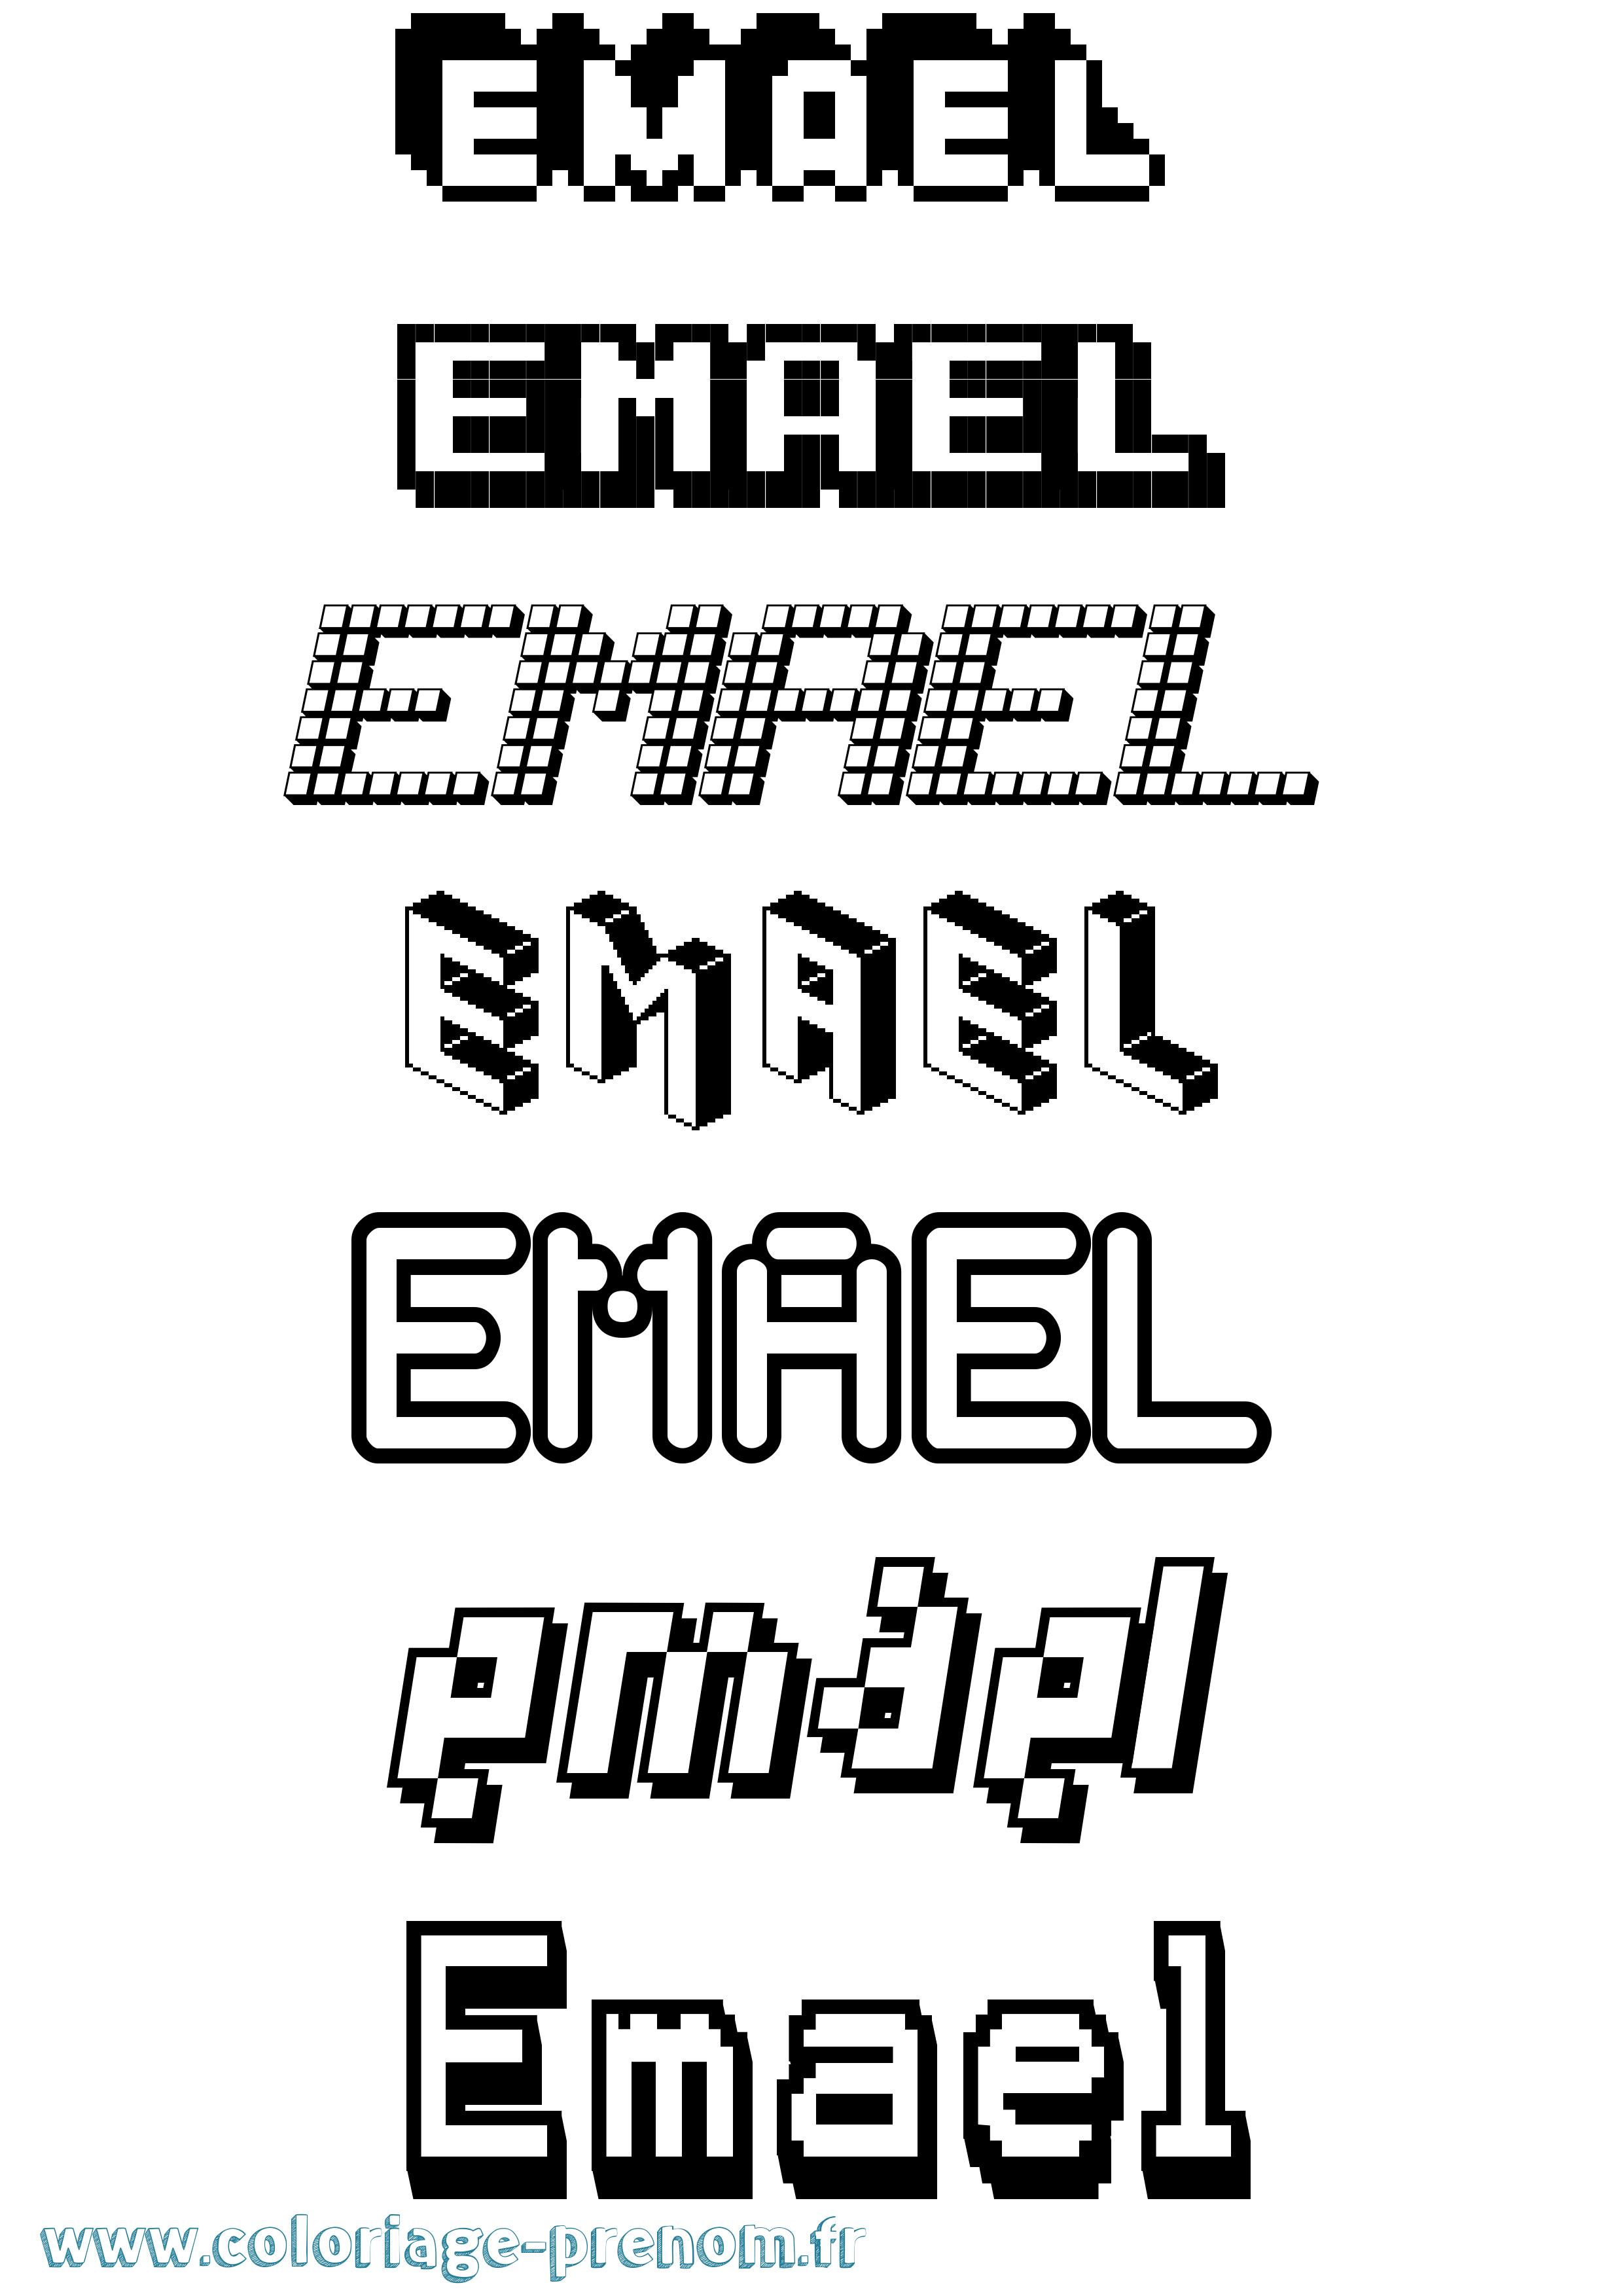 Coloriage prénom Emael Pixel